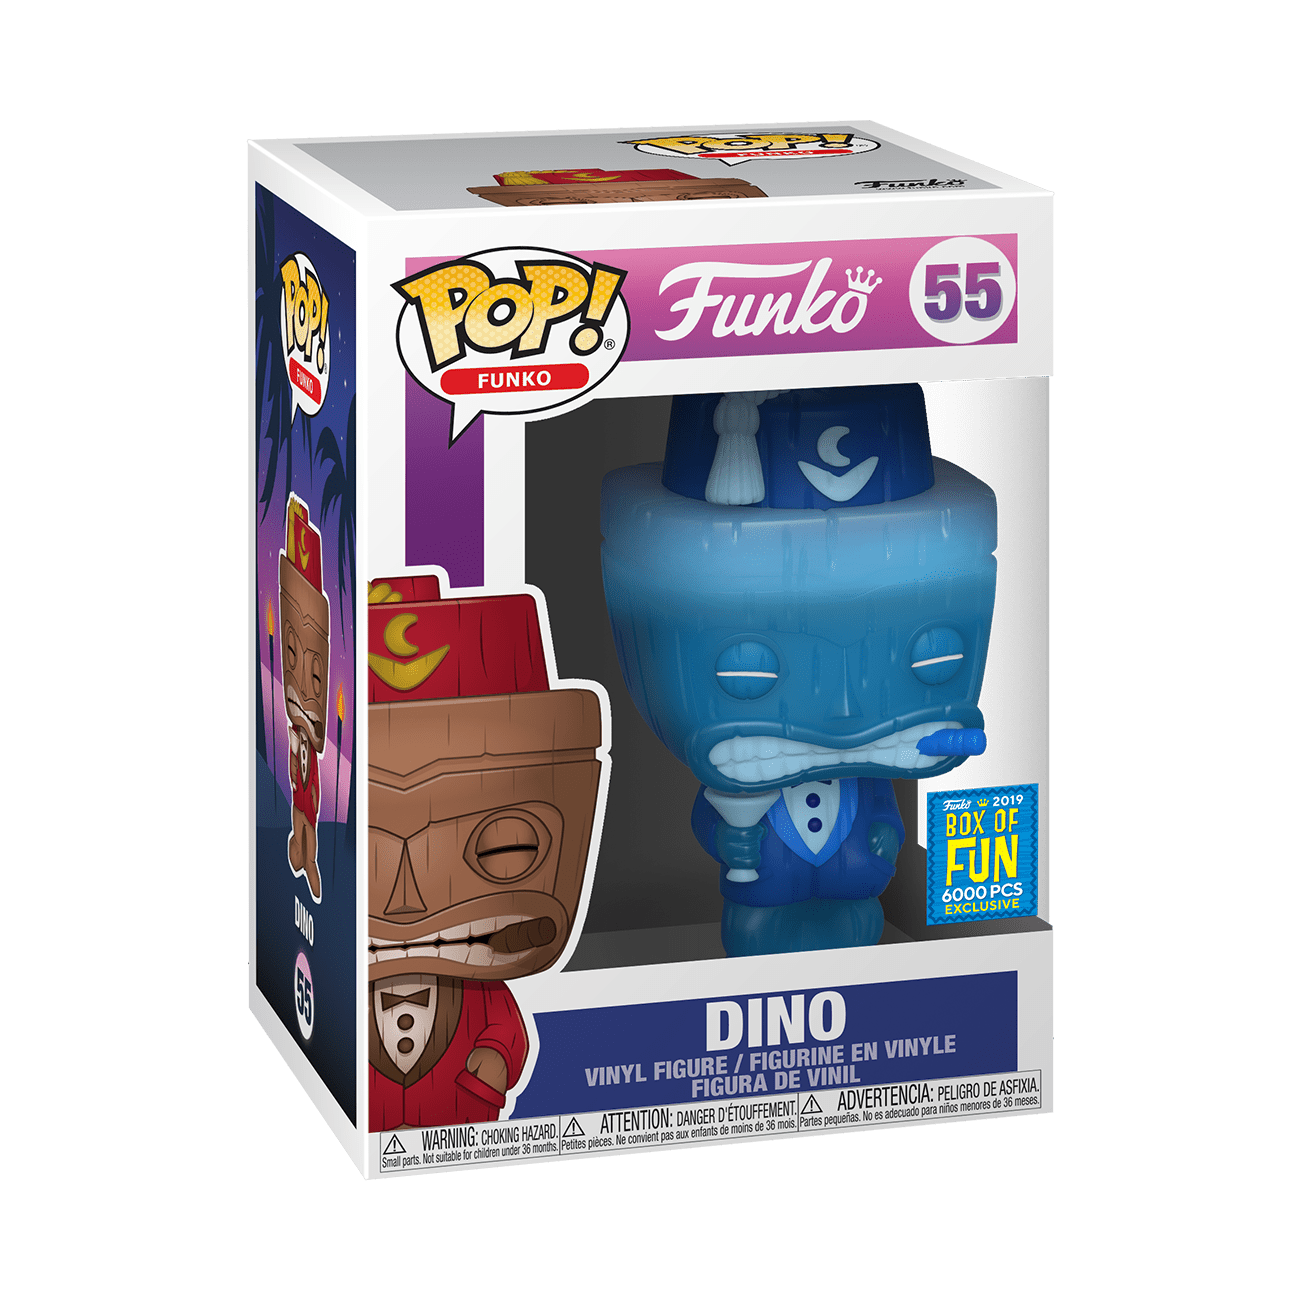 Dino (Blue) Pop Vinyl Pop Funko